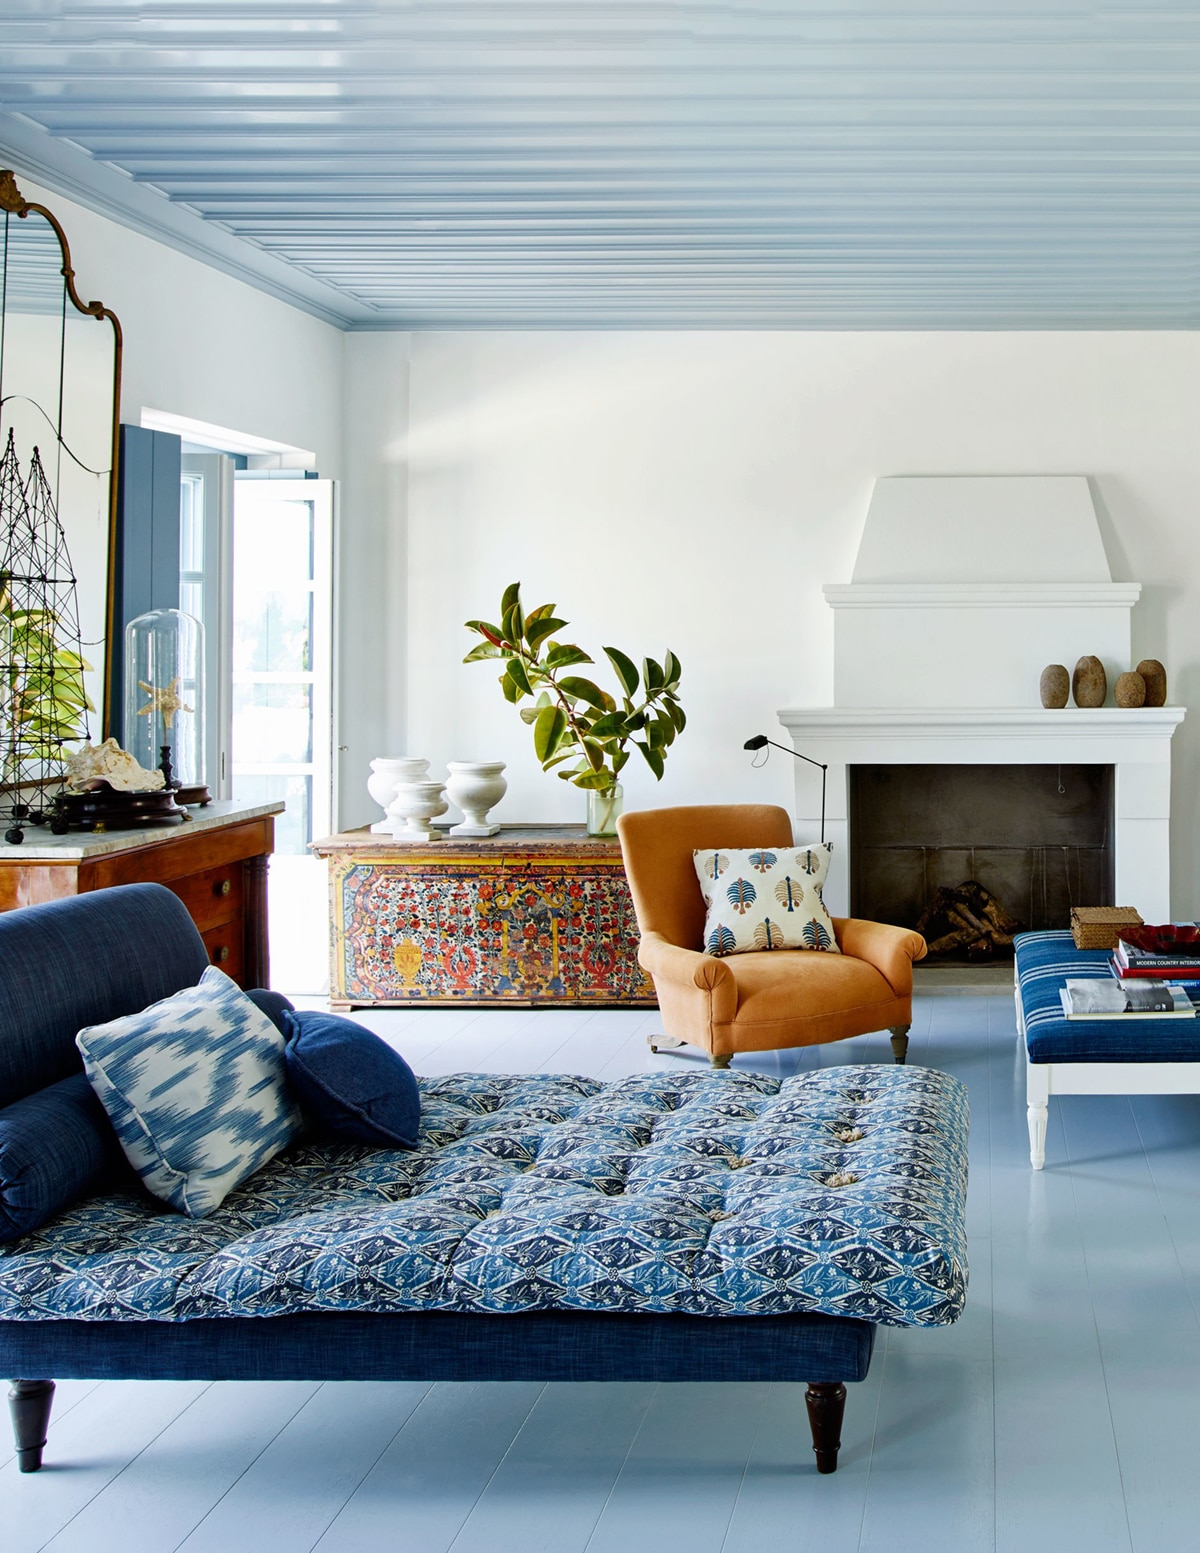 greek island living room in blue and orange | house tour via coco kelley